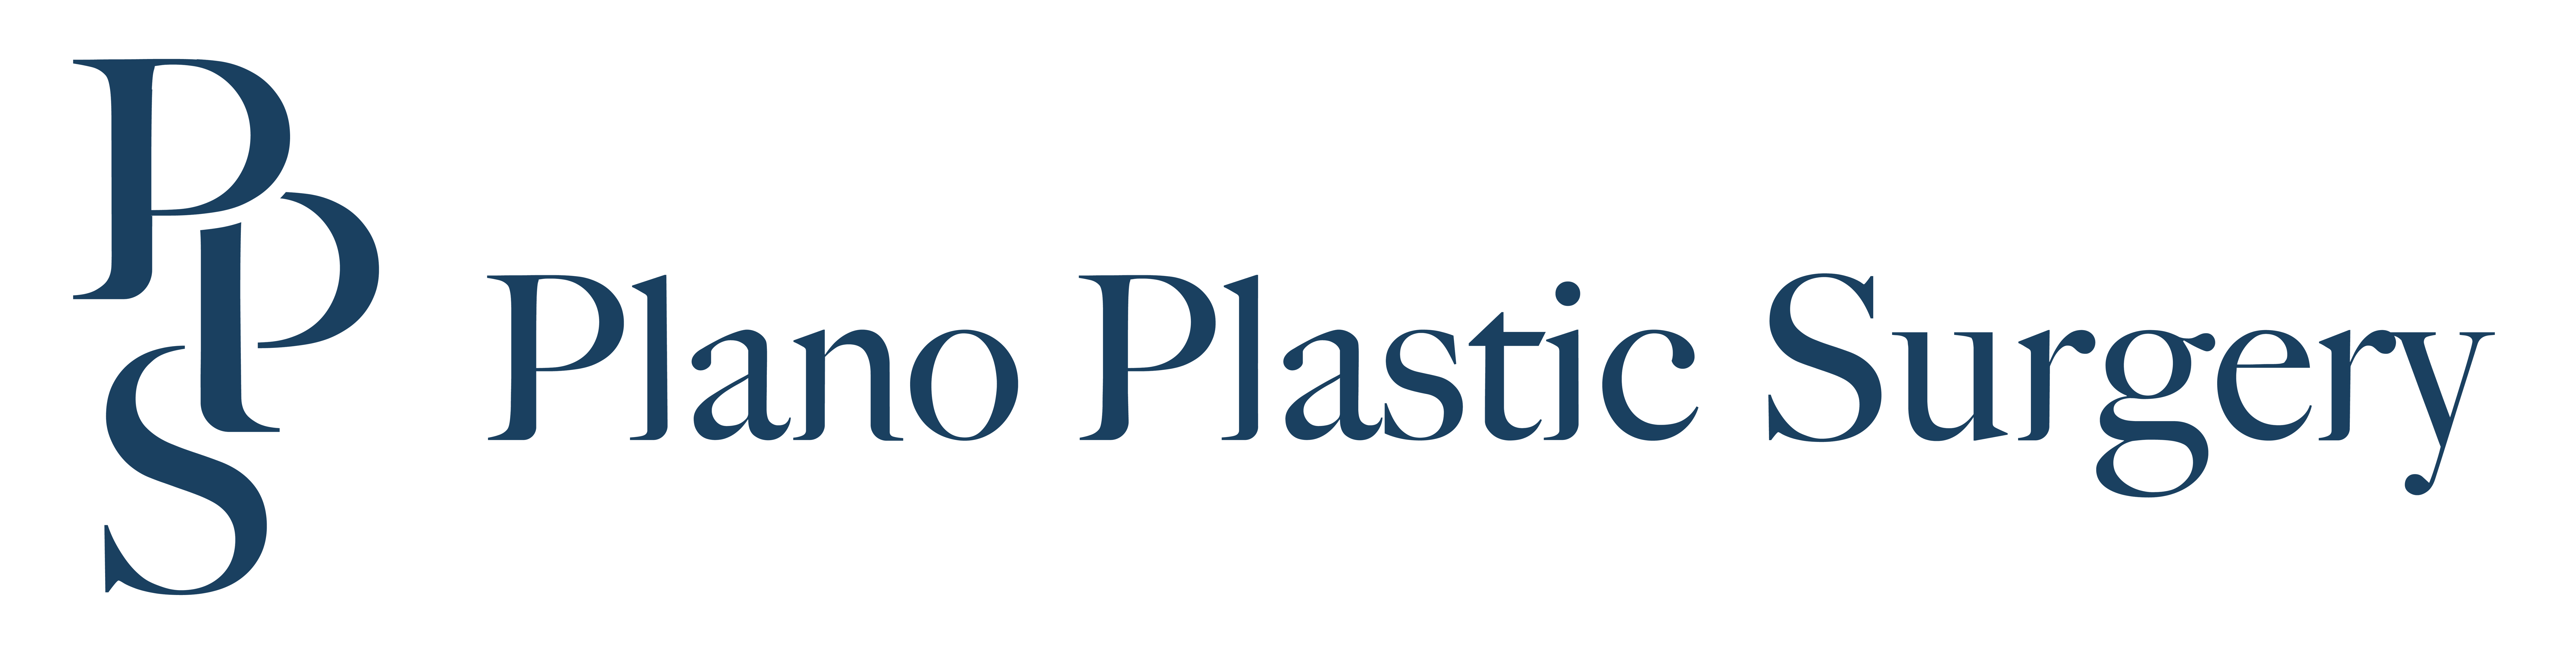 Gynecomastia LP - Plano Plastic Surgery